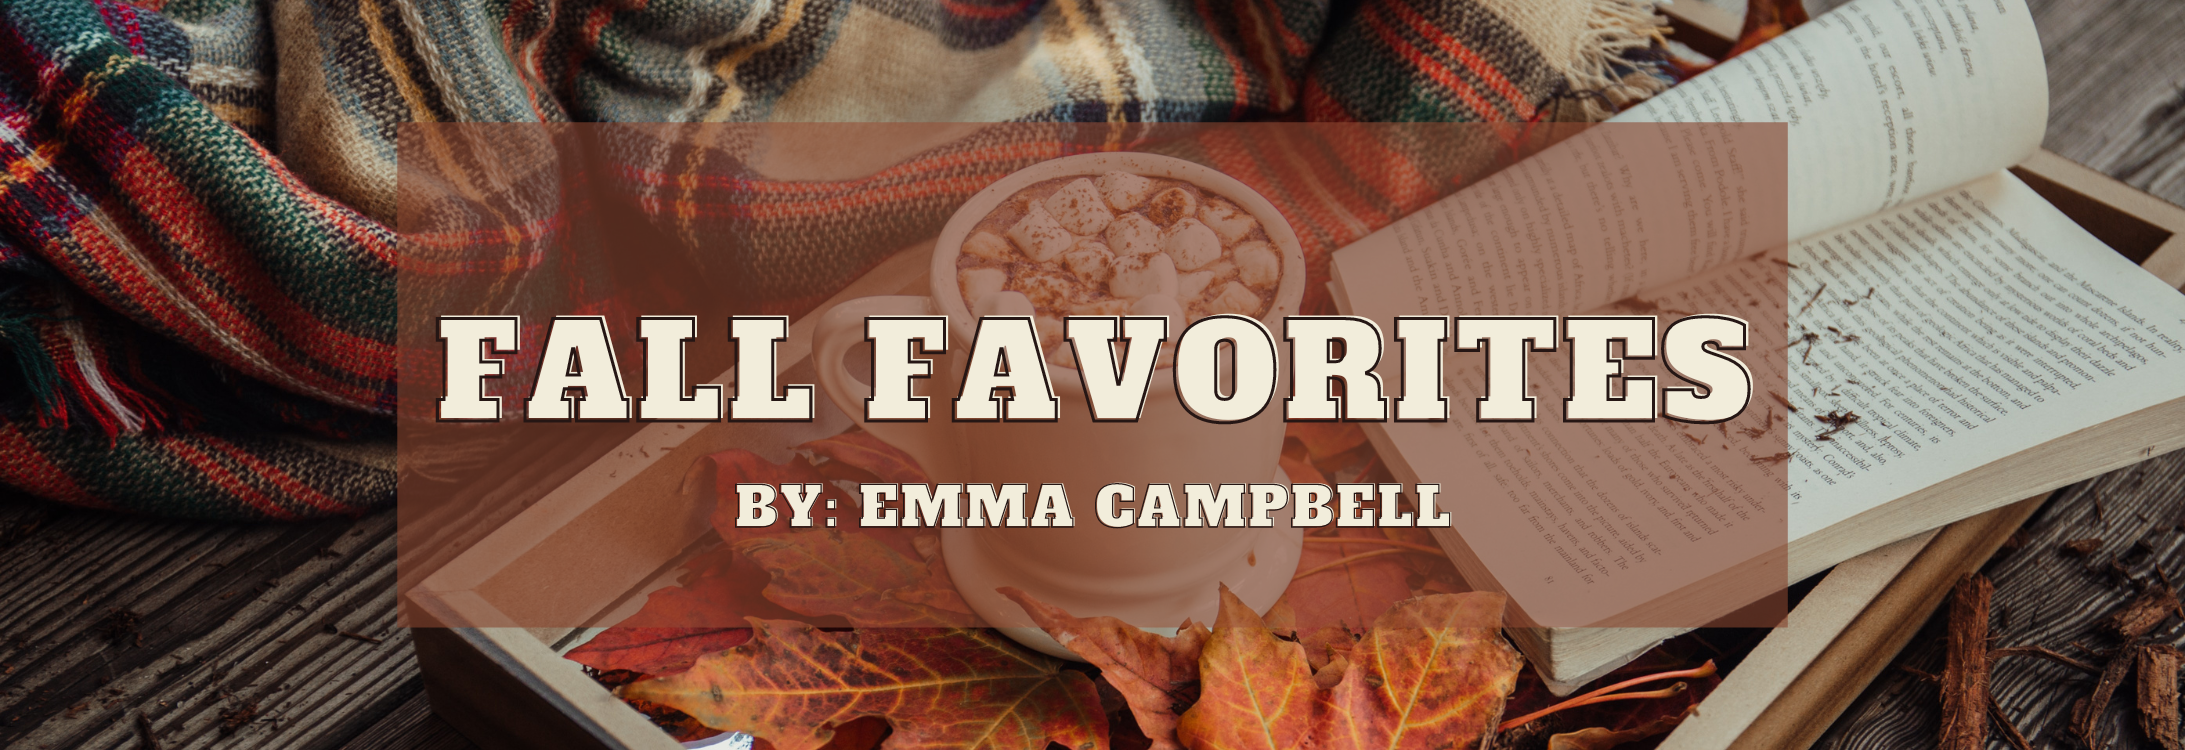 Fall Favorites blog cover